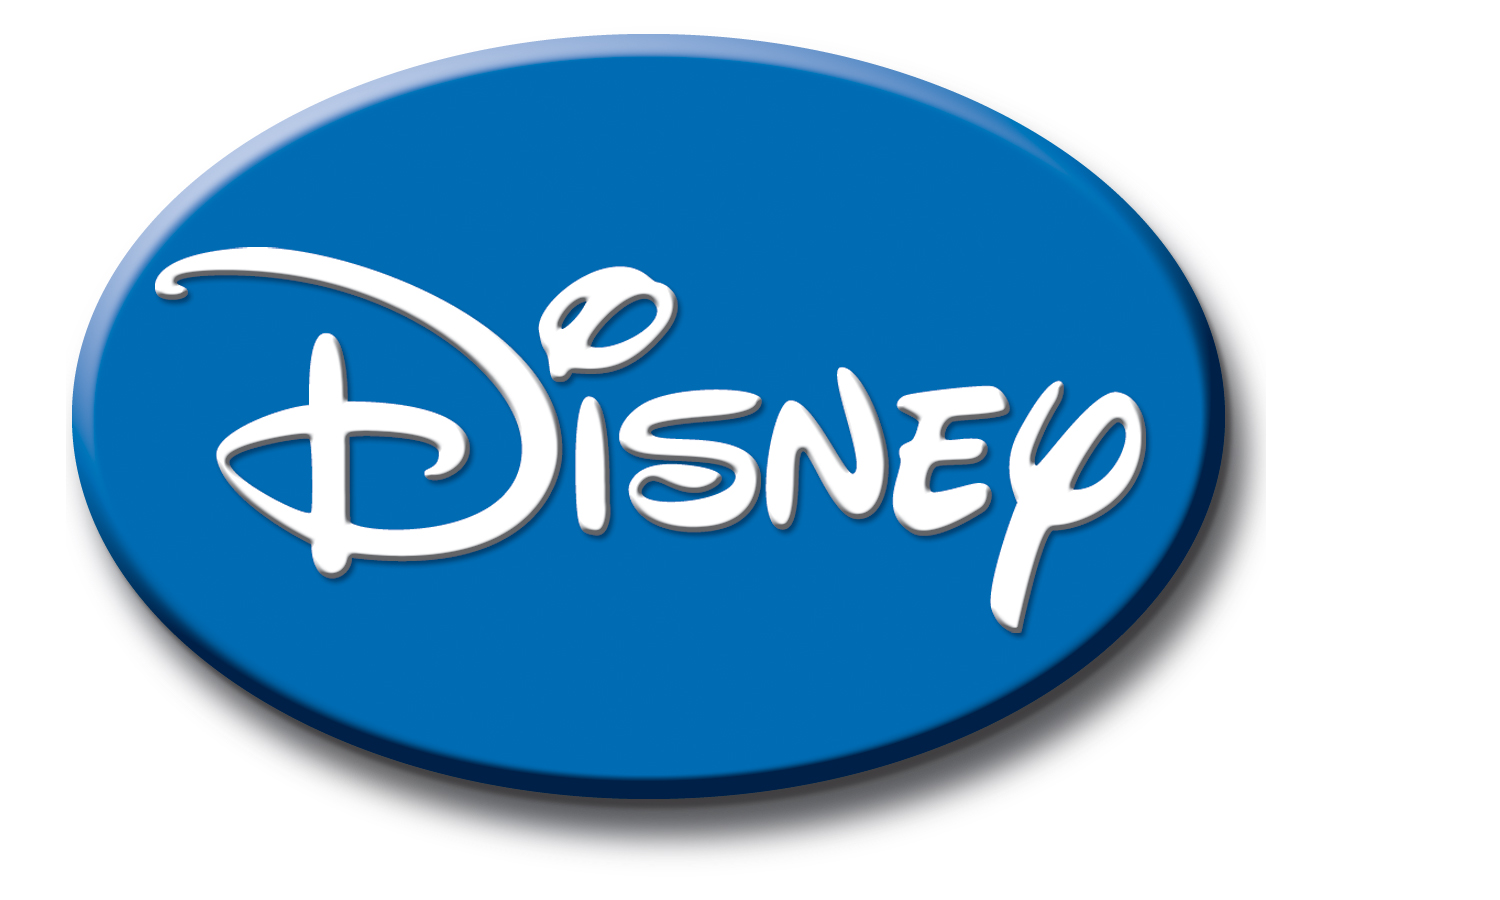 Disney-logo-oval.jpg